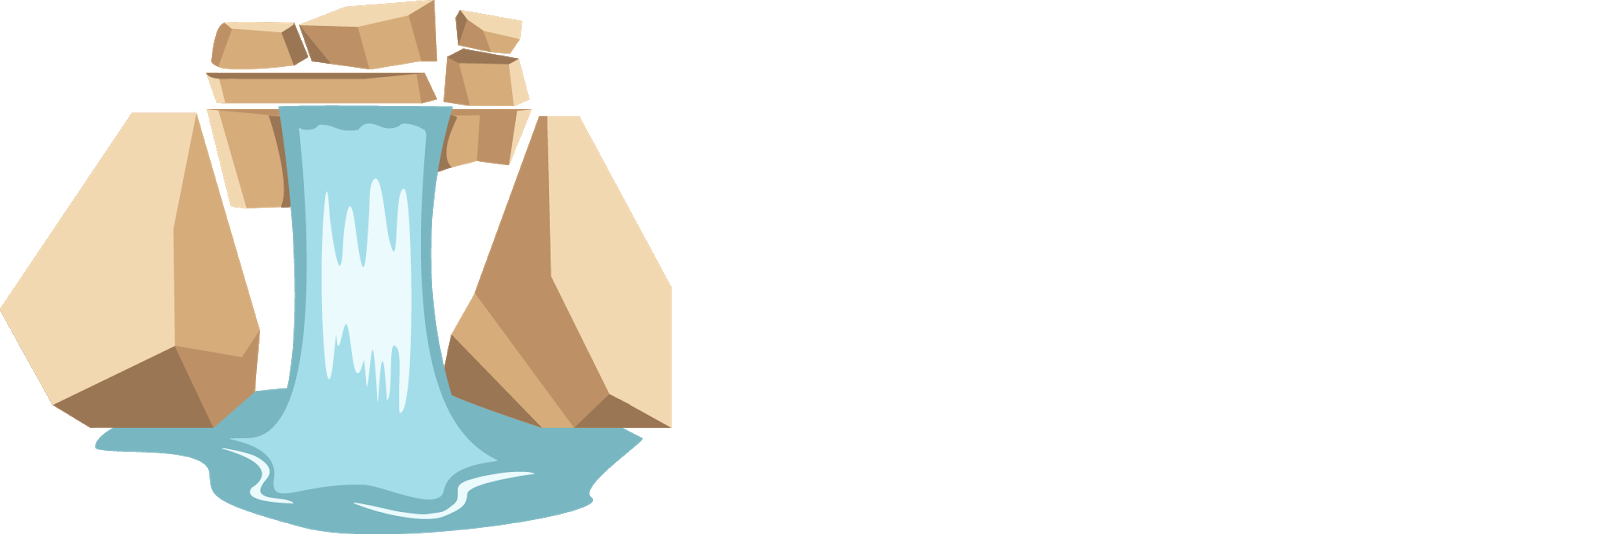 A C Arts and Construction Inc